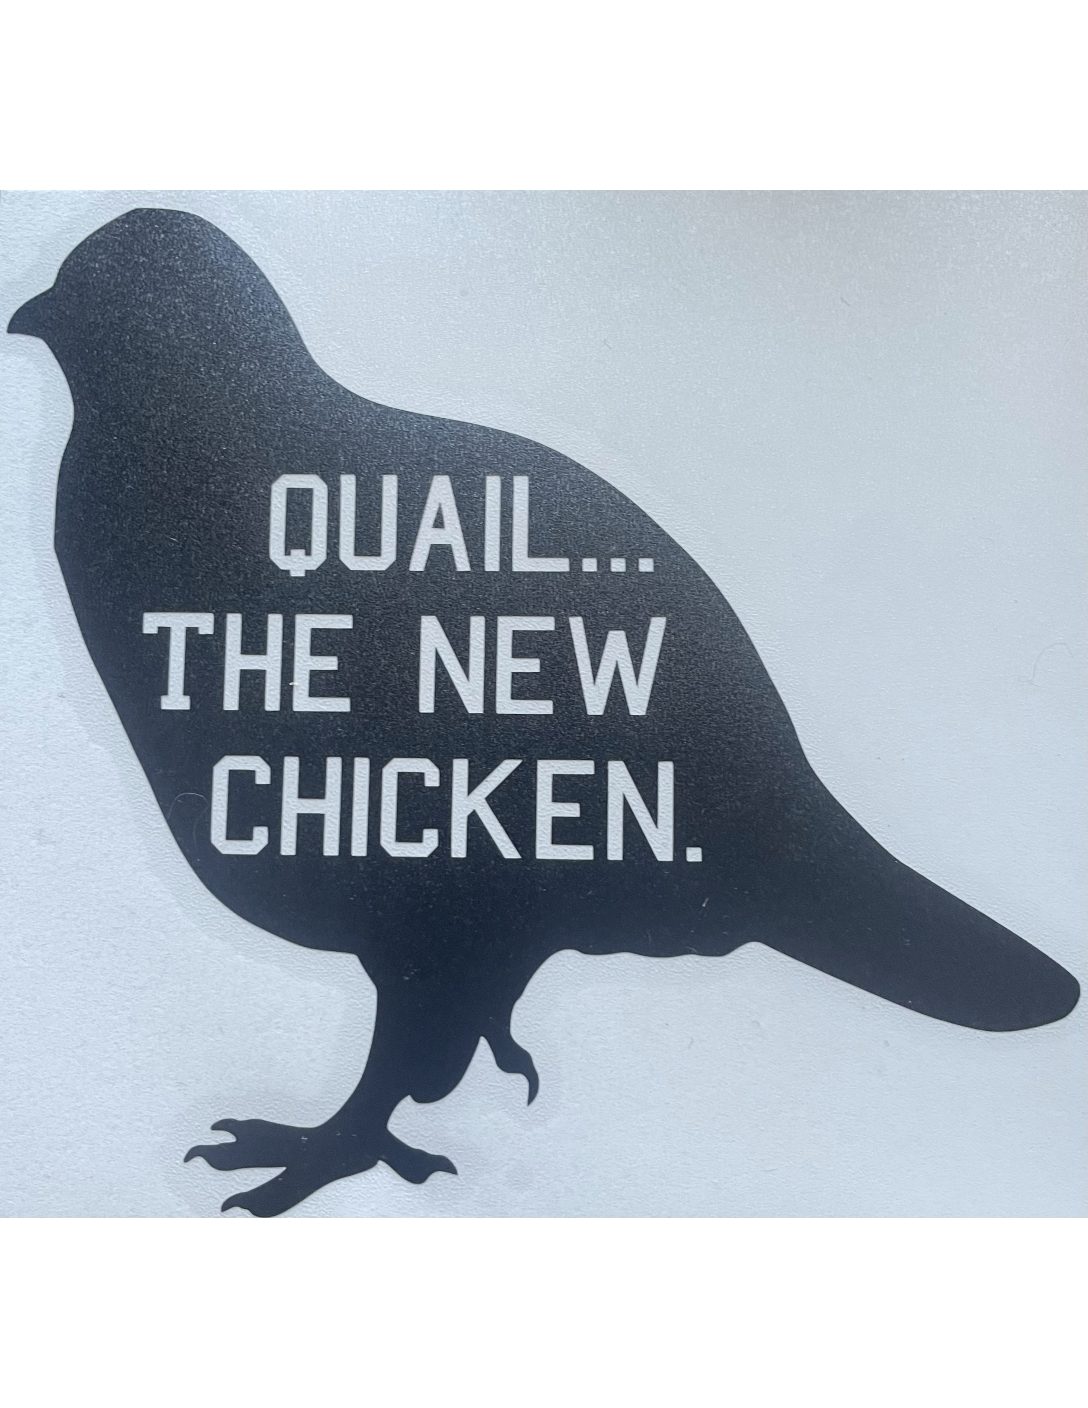 Quail…The New Chicken – DECAL – Myshire Farm